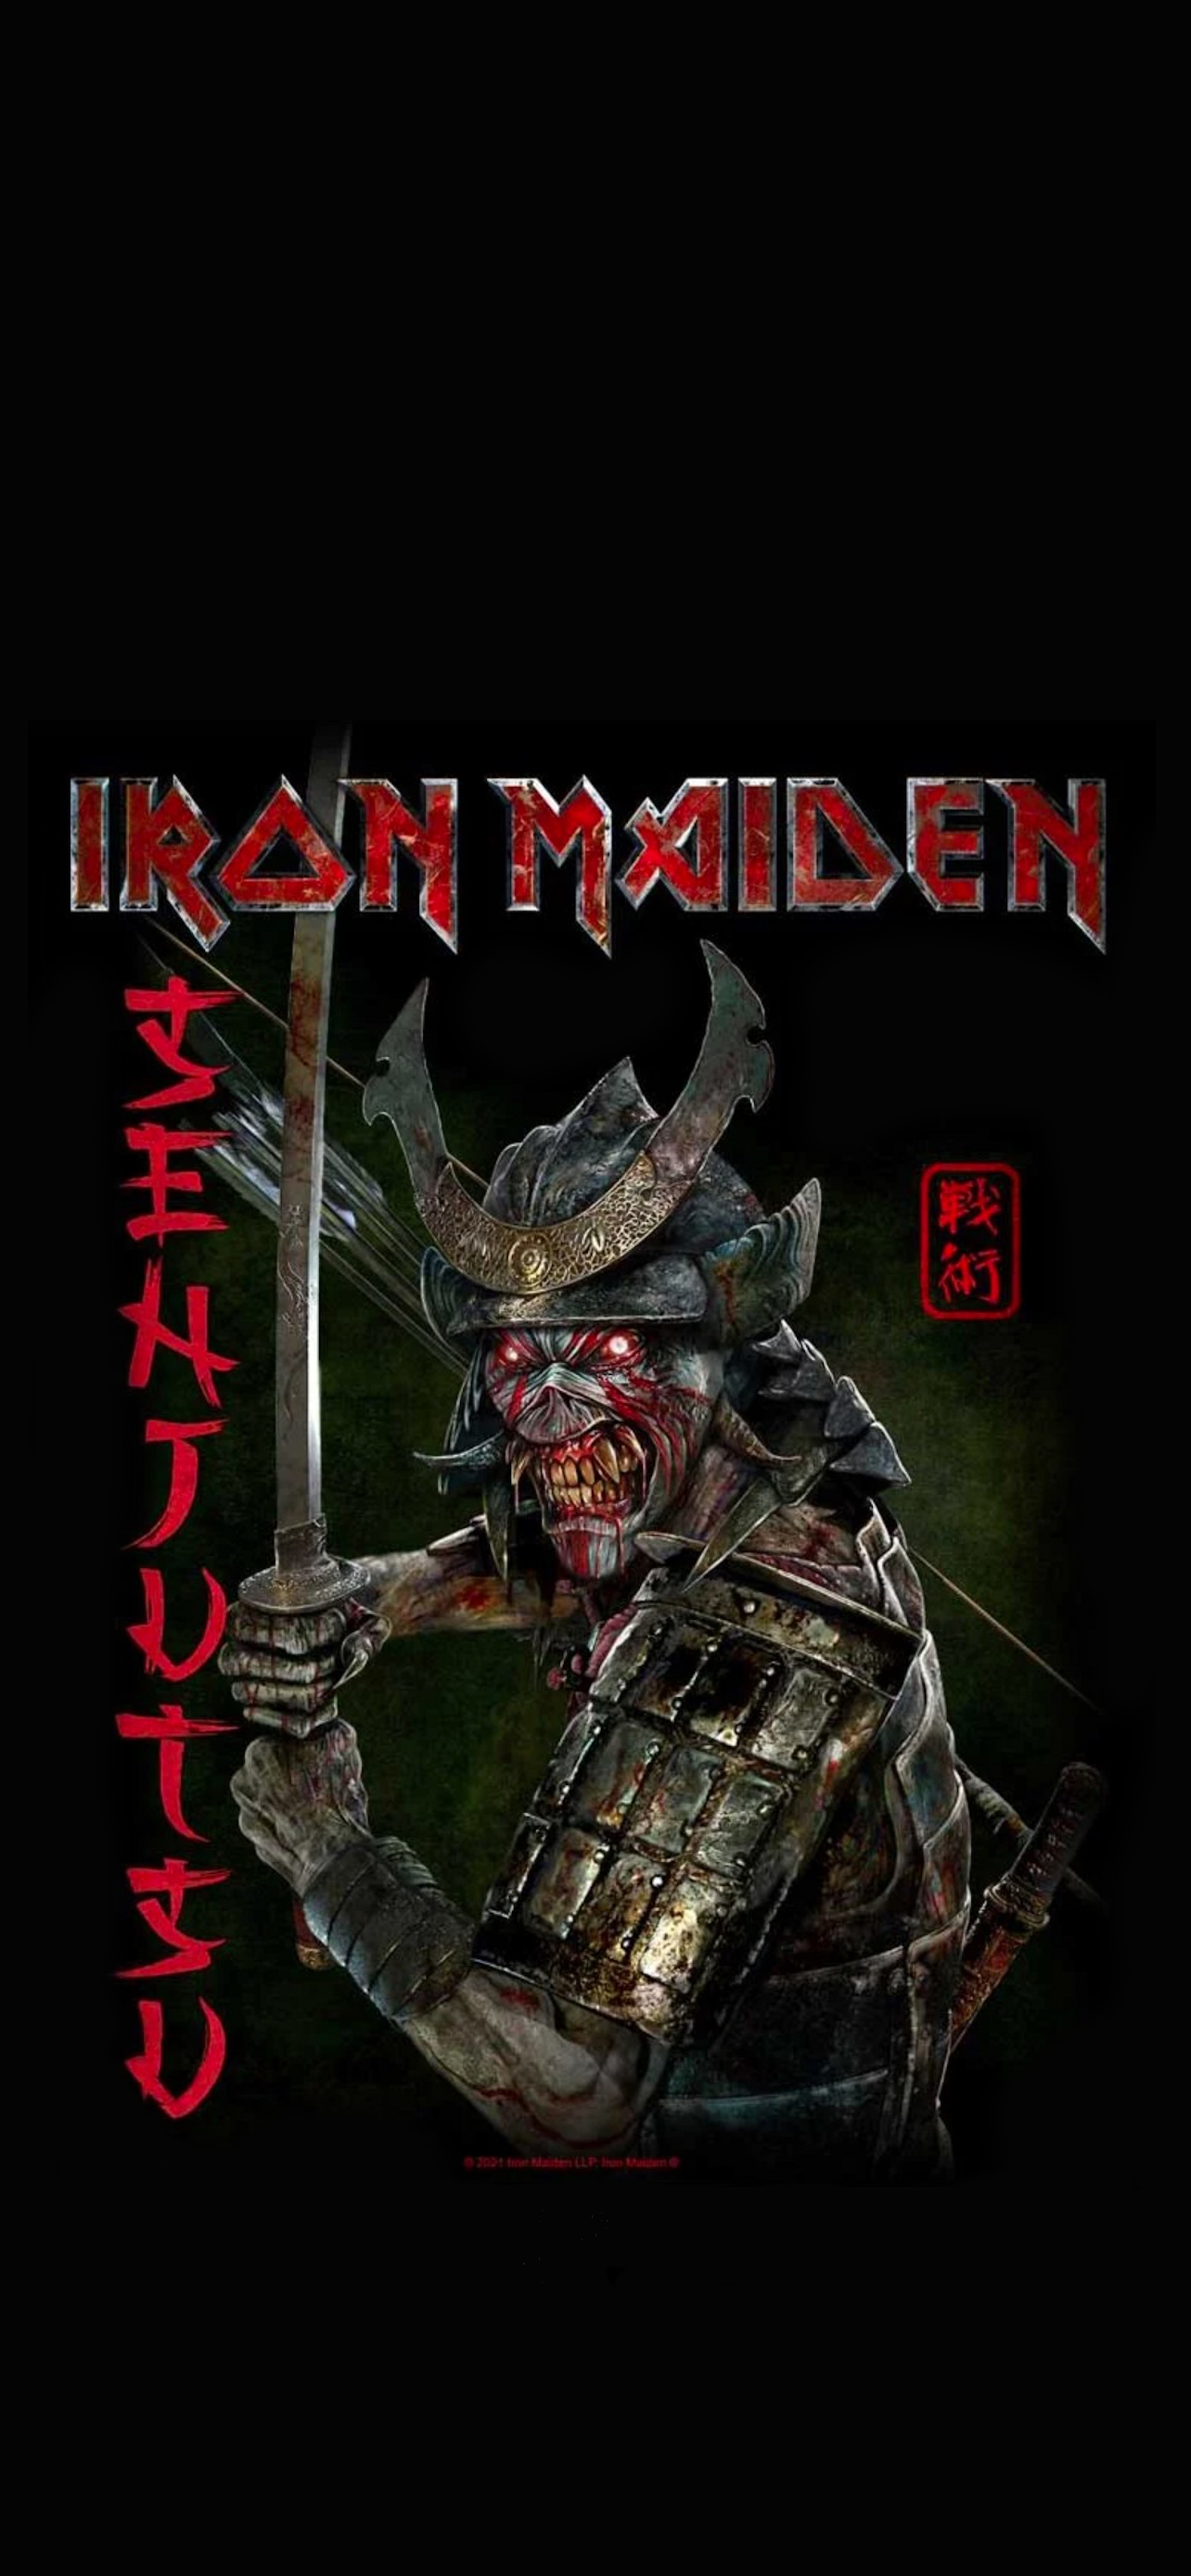 Iron Maiden Phone Wallpaper